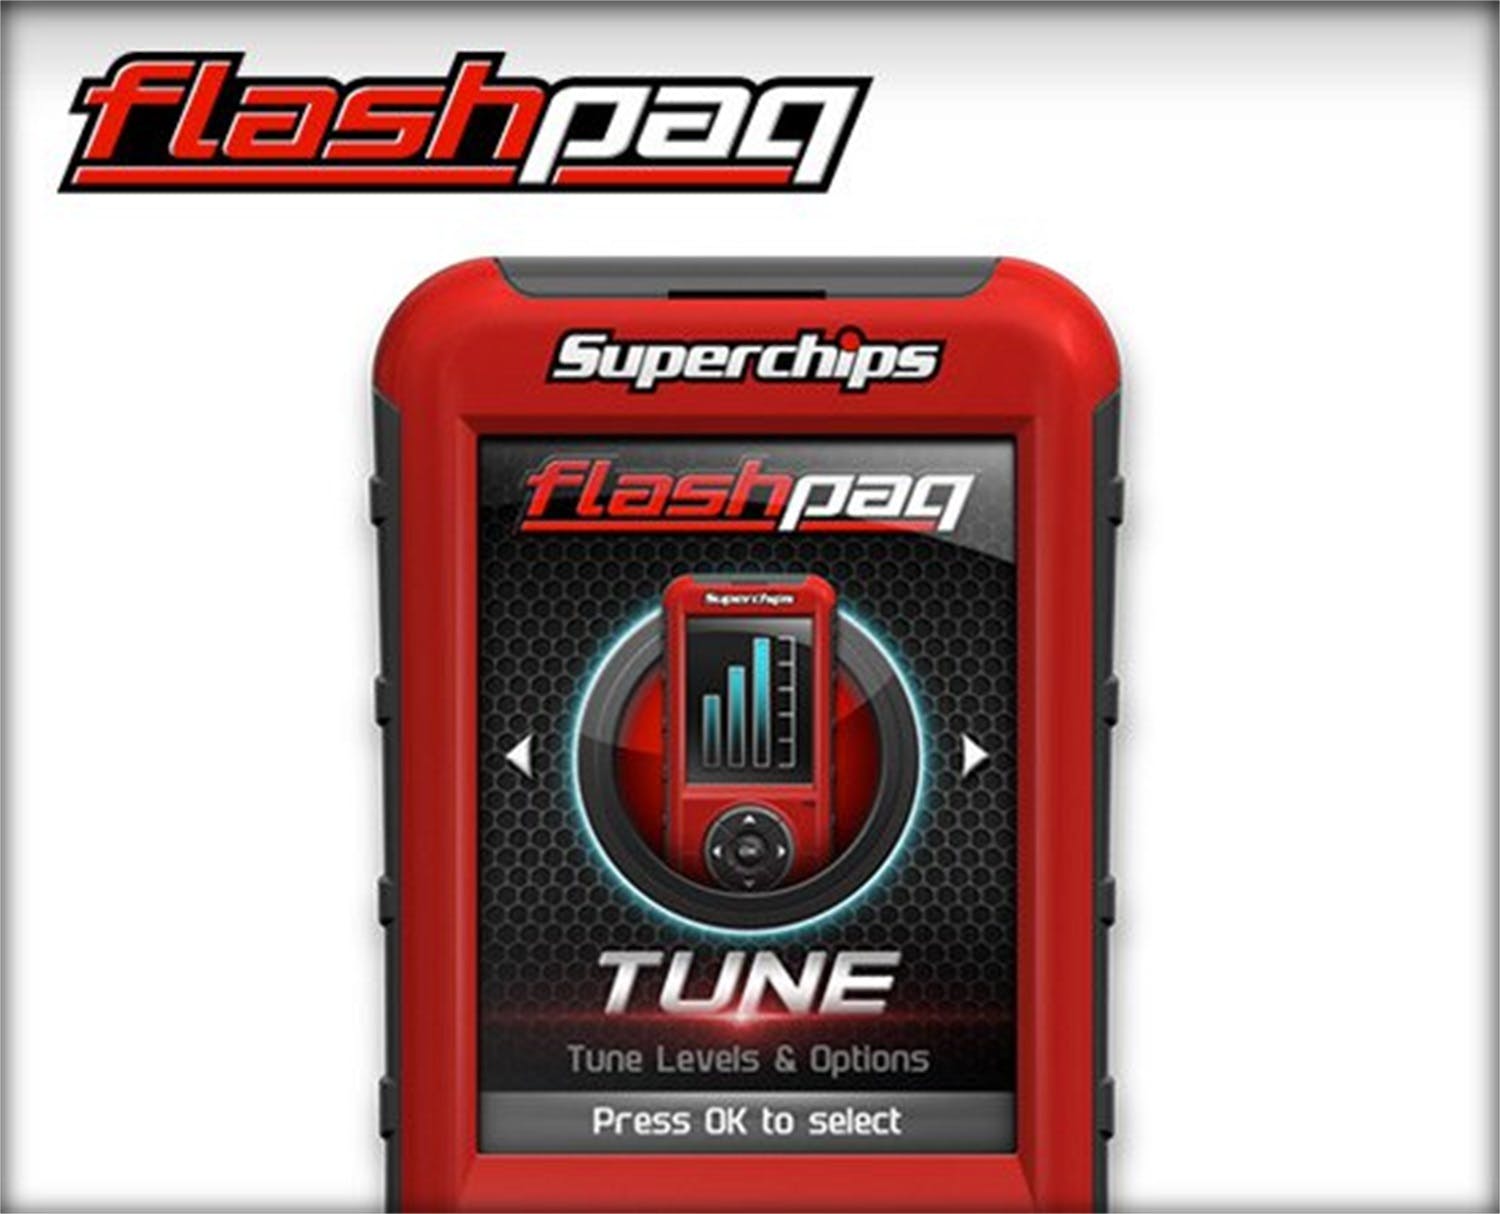 Superchips 4845 Flashpaq F5 CARB